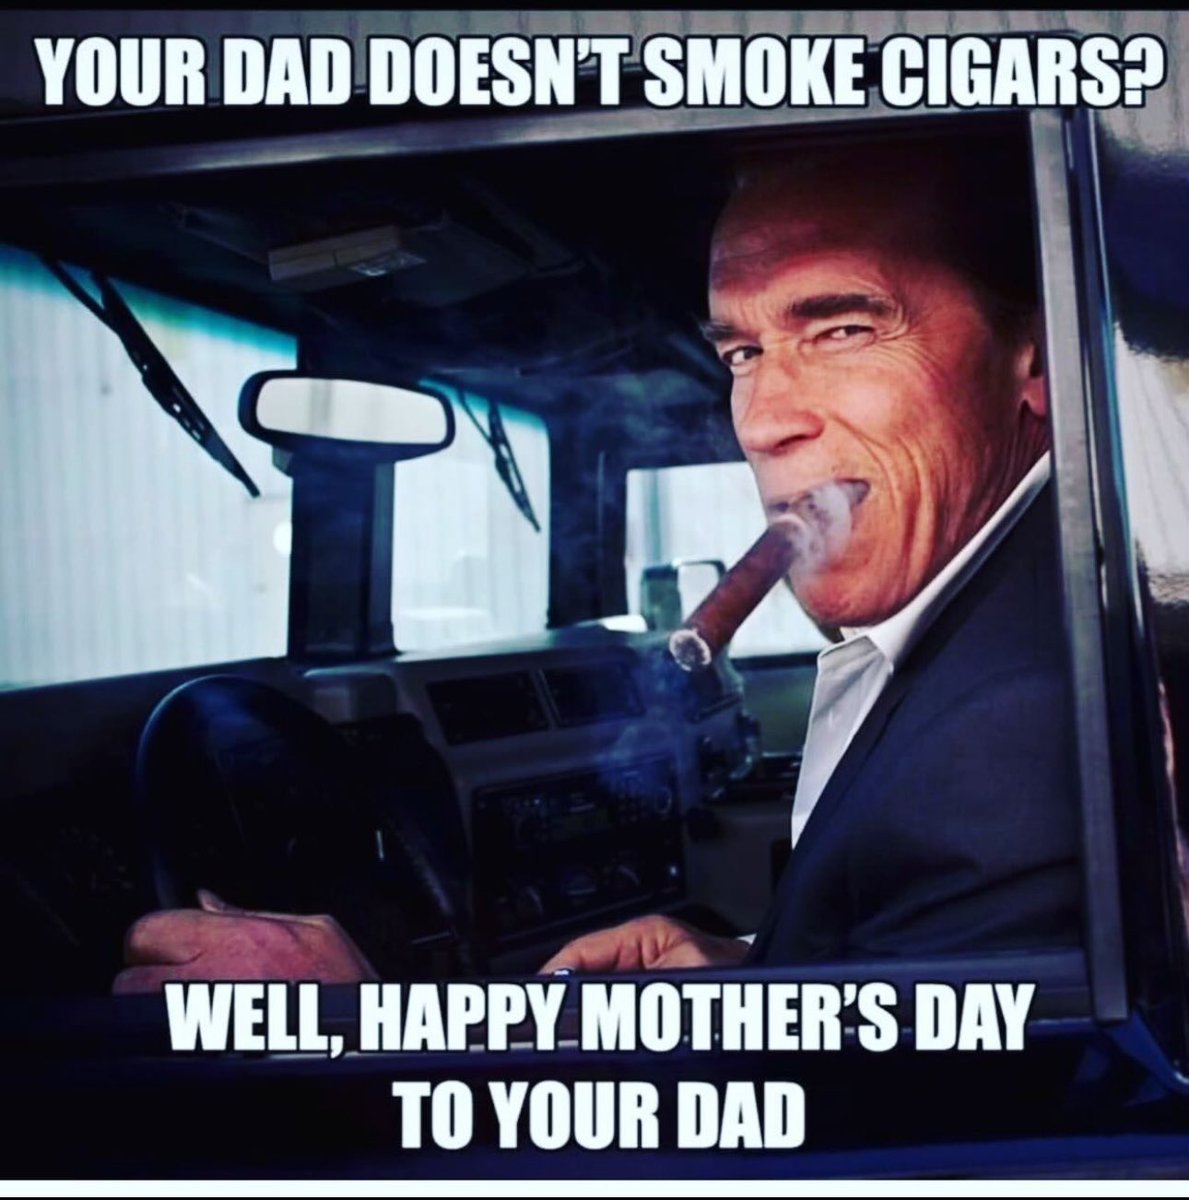 Lmaooooo this will never get old. 

#cigarhumor #cigars #ArnoldSchwarzenegger